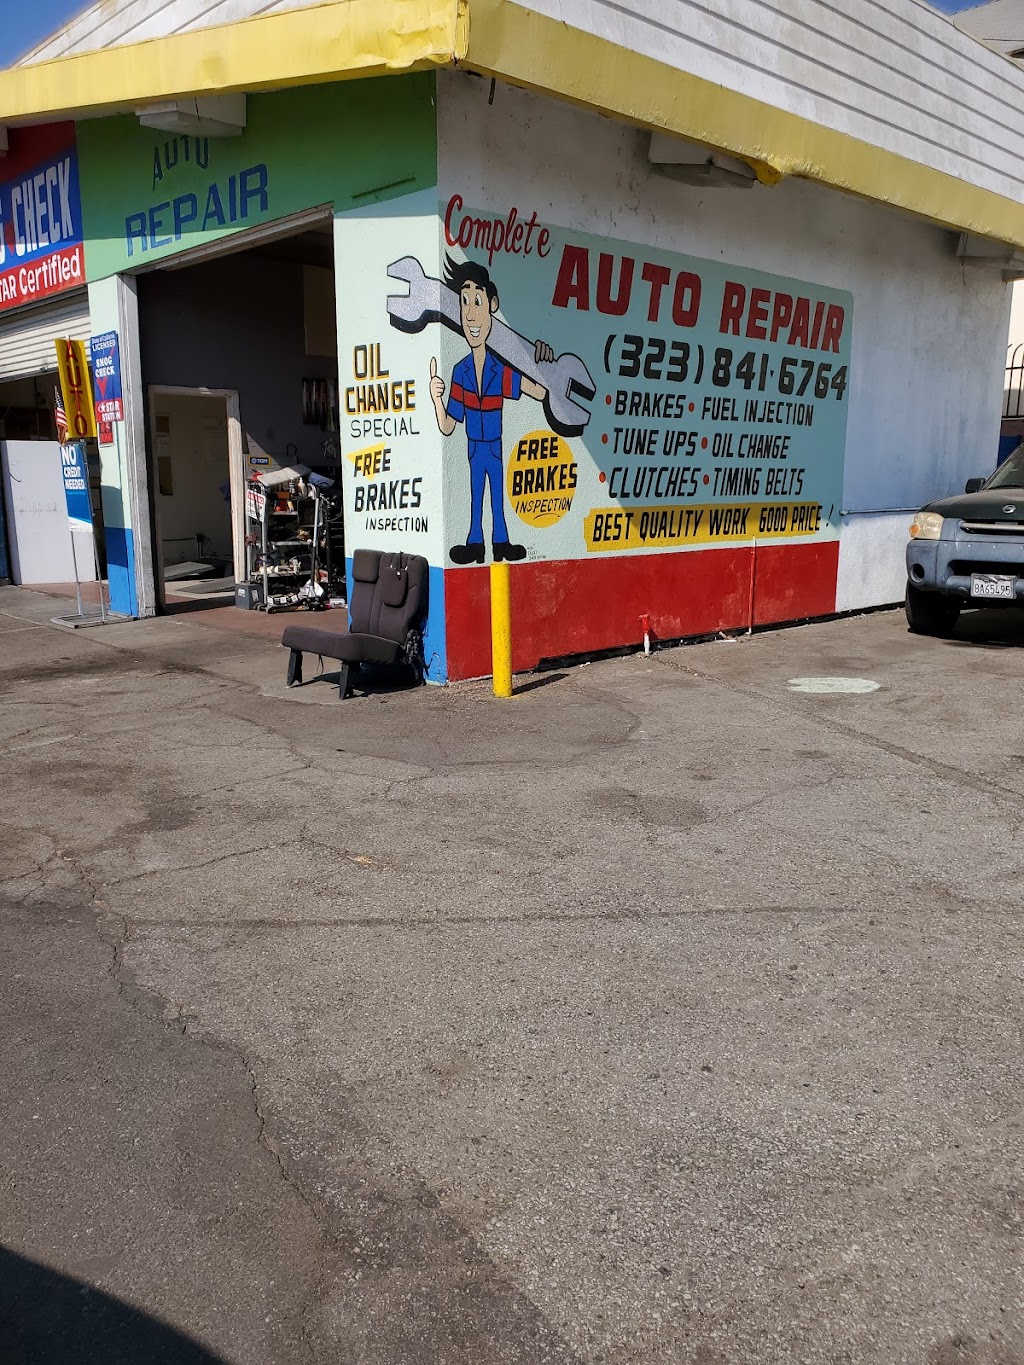 Hectors High Performance Auto Repair | 3475 Firestone Blvd, South Gate, CA 90280, USA | Phone: (323) 841-6764